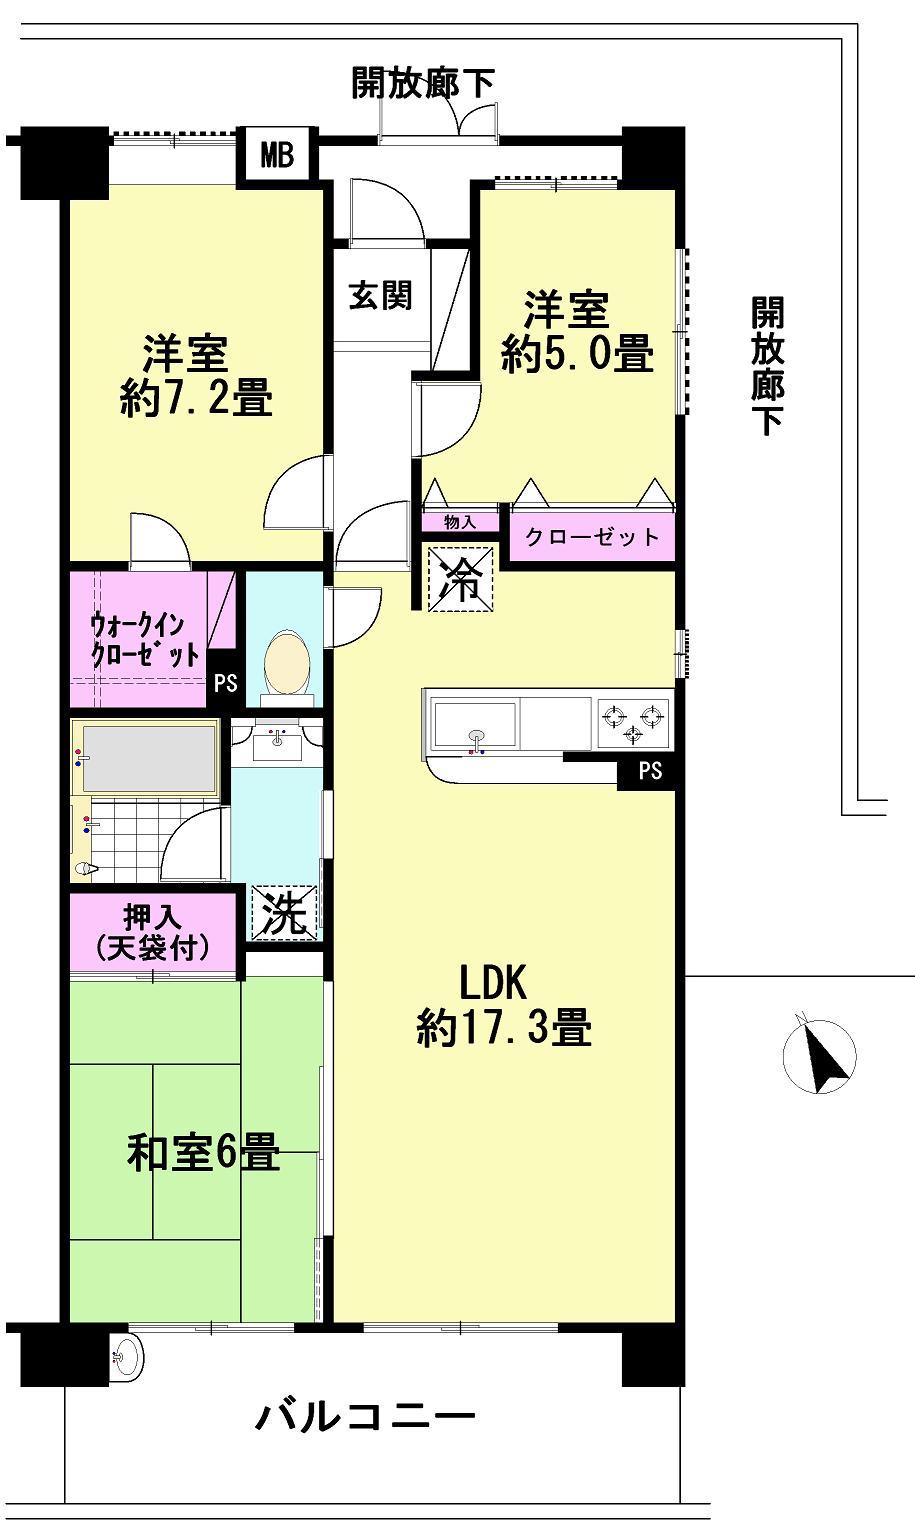 Floor plan. 3LDK, Price 18.5 million yen, Footprint 76.4 sq m , Balcony area 12.8 sq m